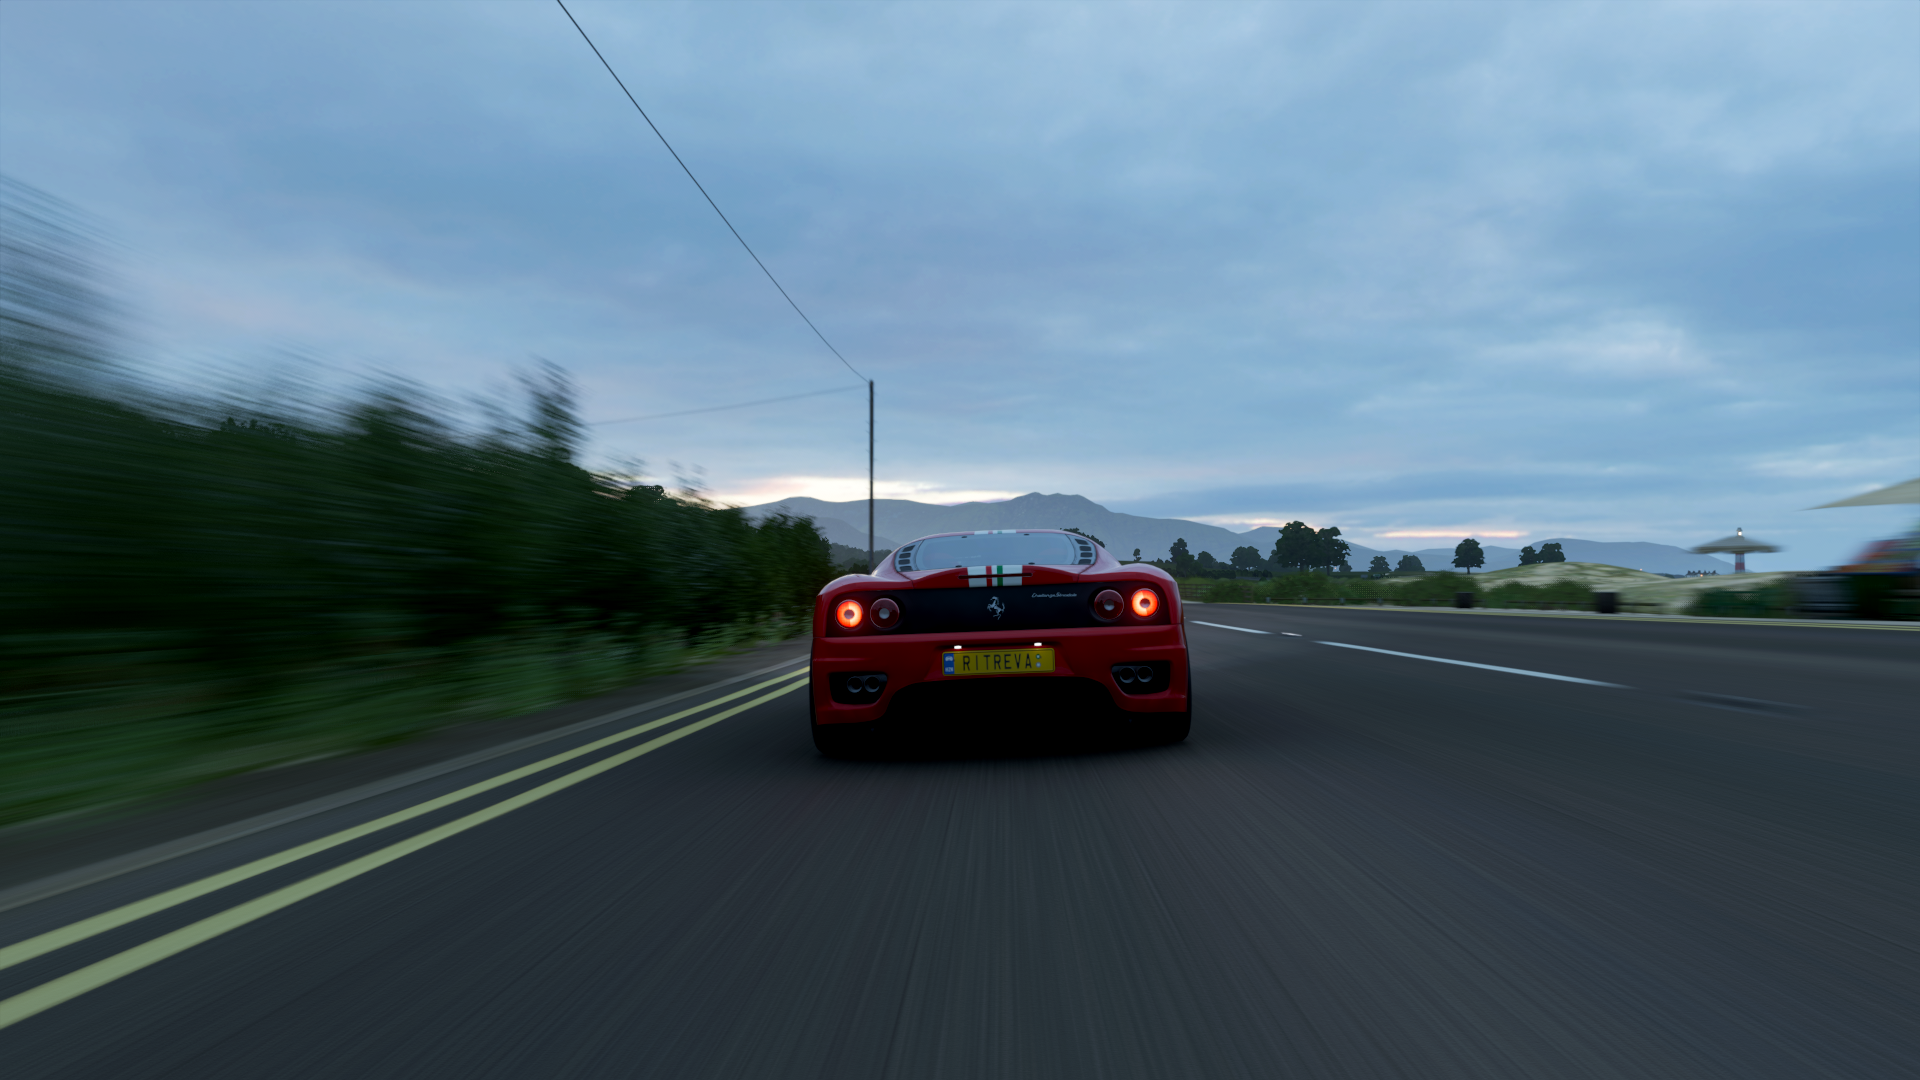 General 1920x1080 Forza Horizon 4 Ferrari red cars car vehicle video games screen shot